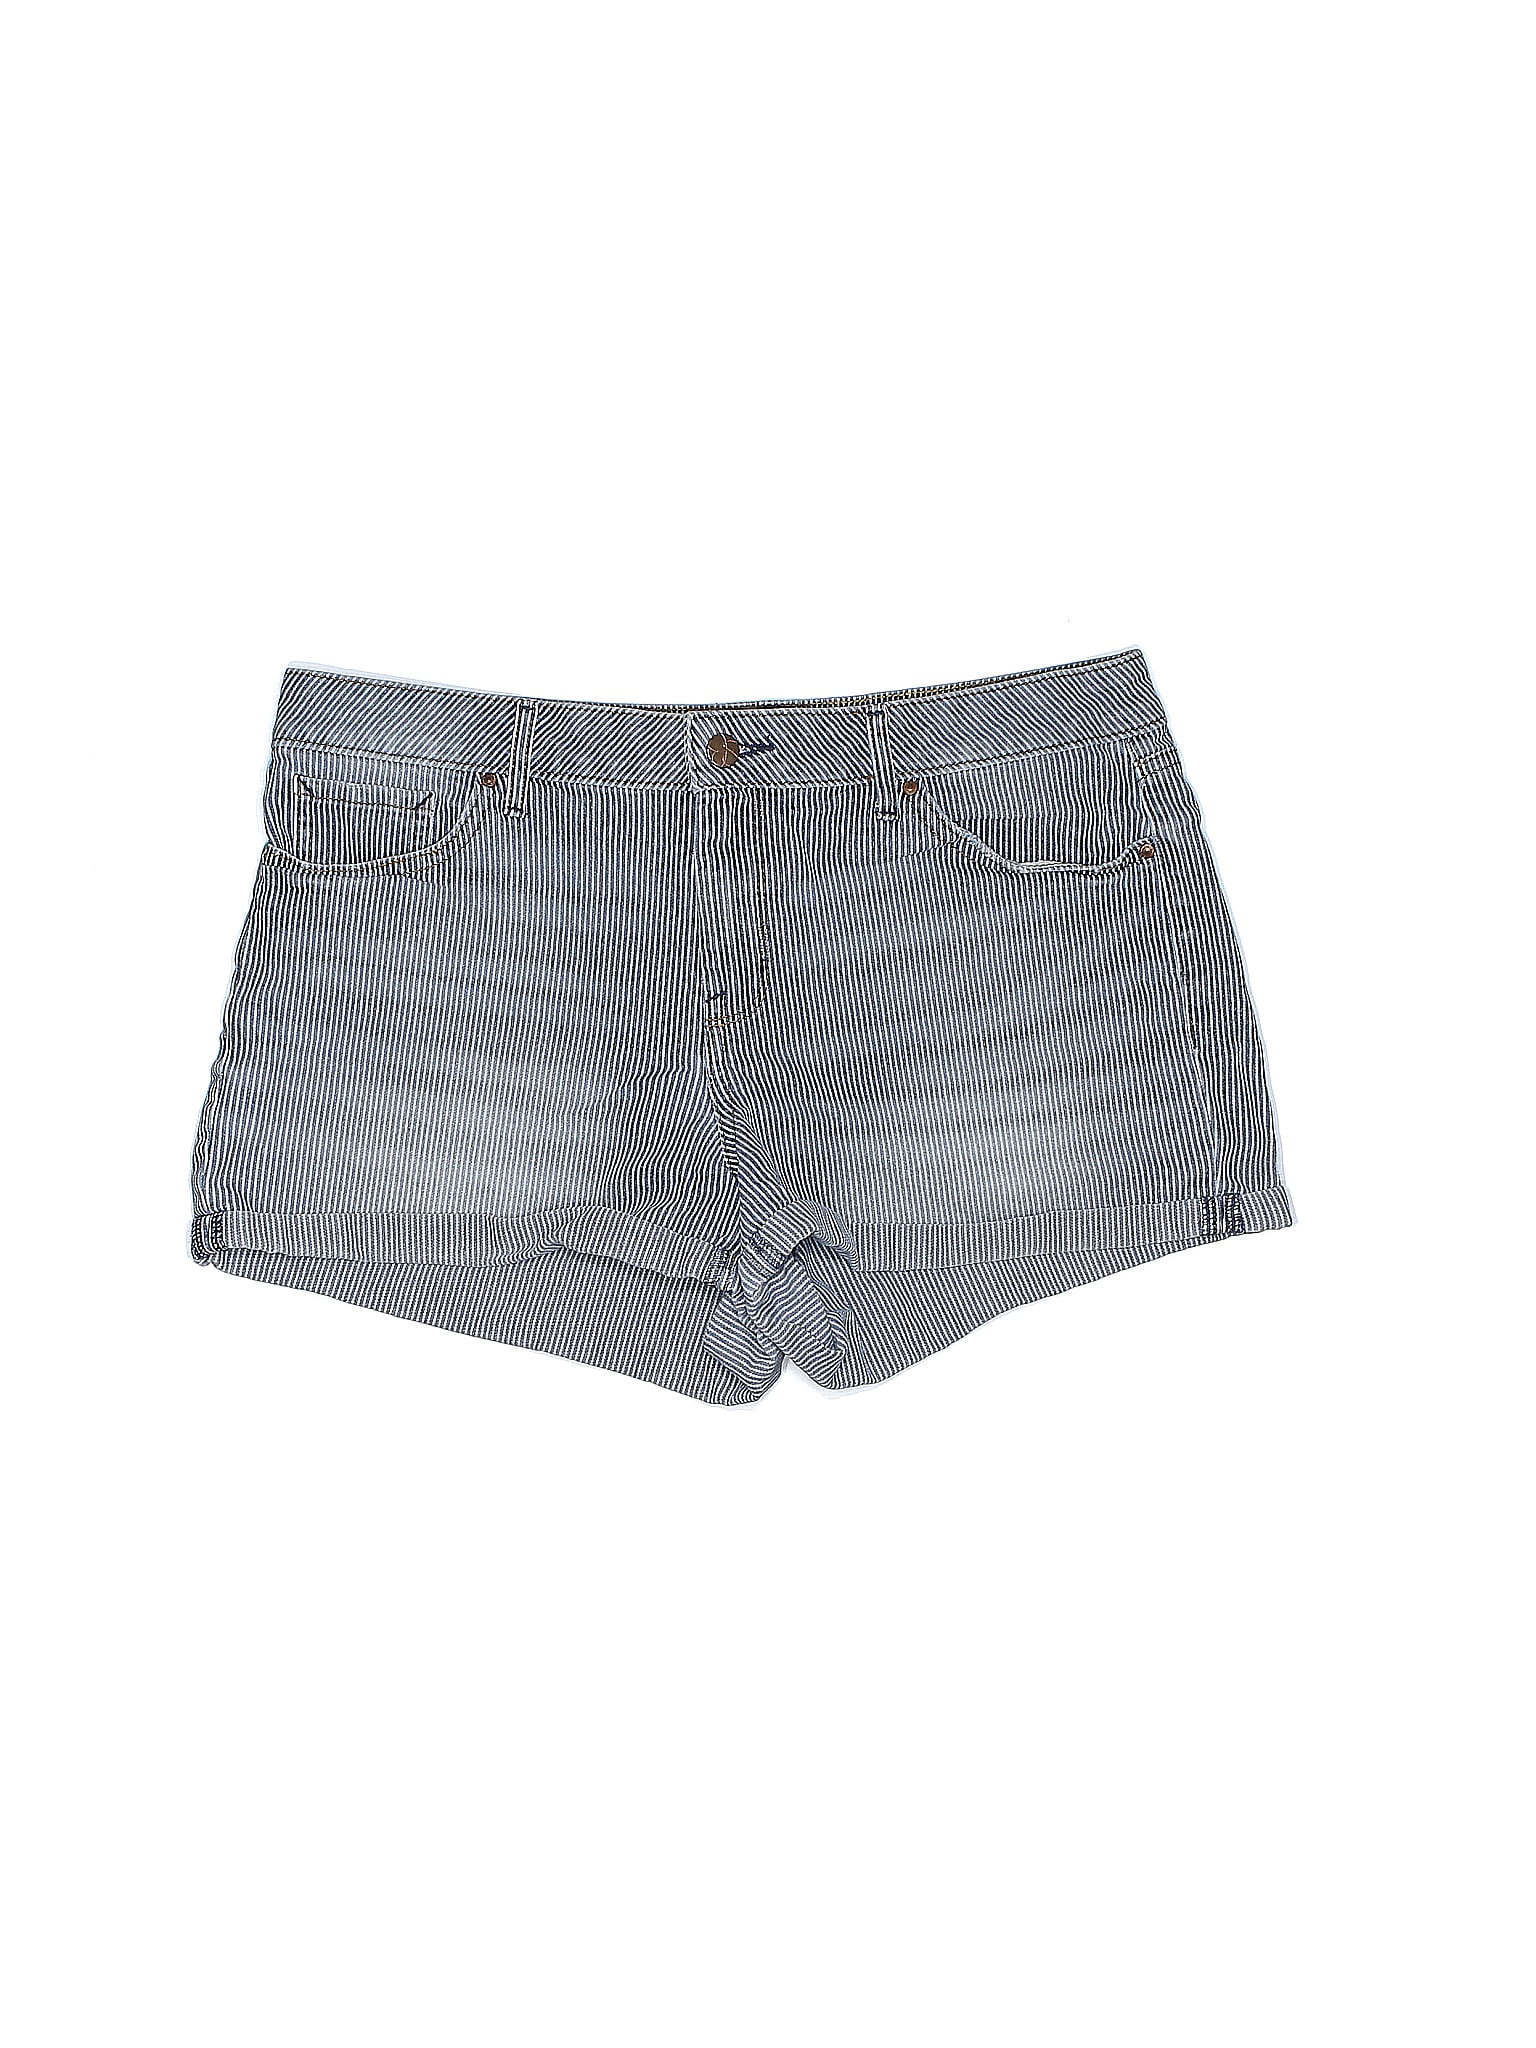 Pre-Owned Jessica Simpson Women's Size 31W Denim Shorts - Walmart.com